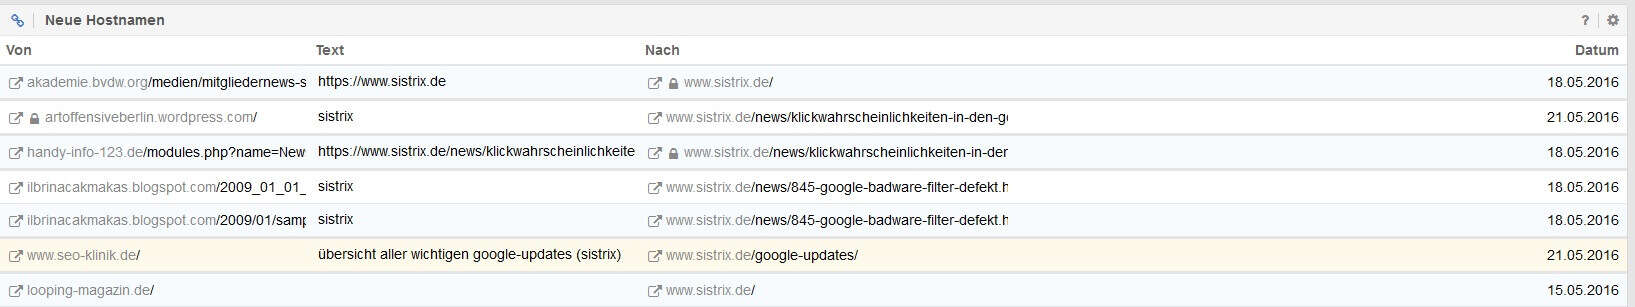 Sistrix neue Links Übersicht by seo-tech.de